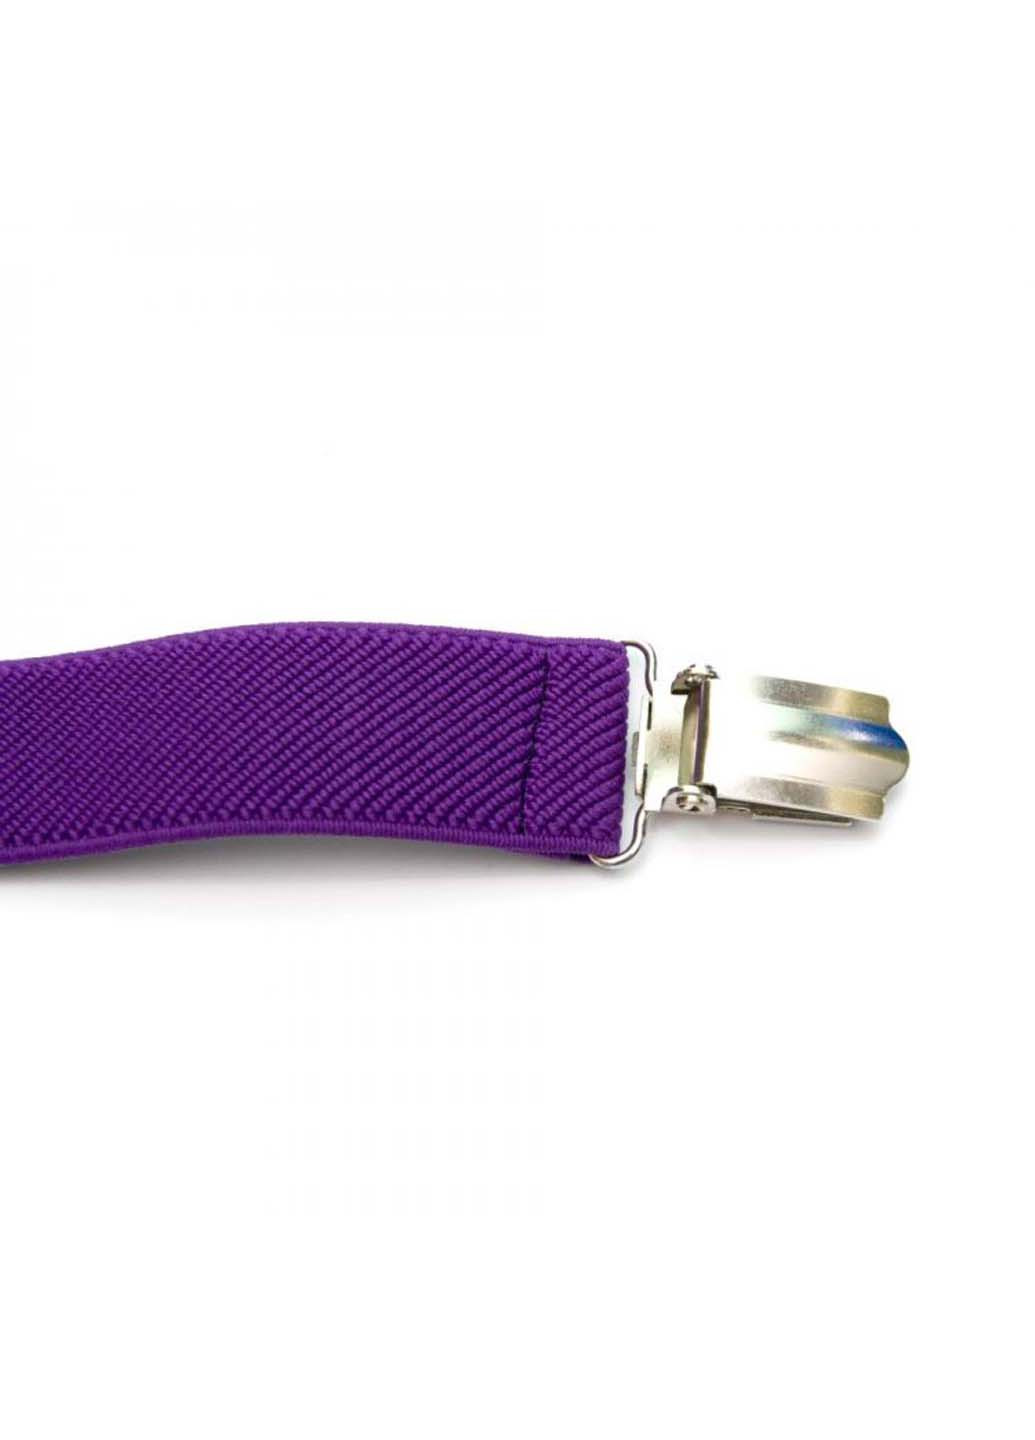 Підтяжки Gofin suspenders (255412108)